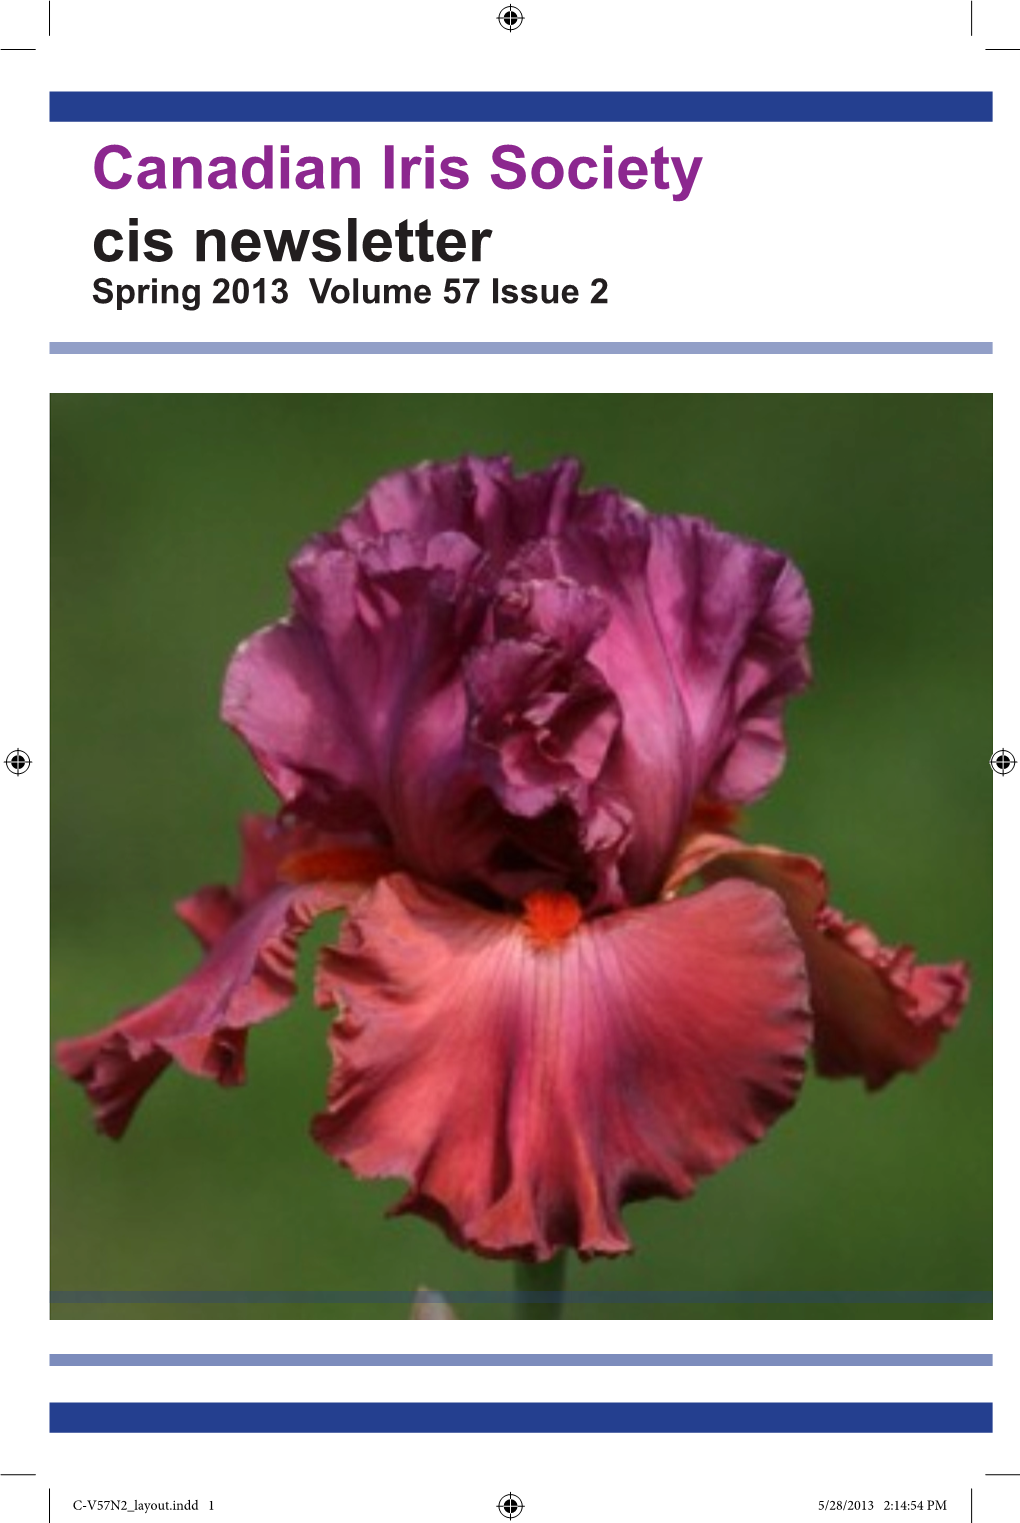 Canadian Iris Society Cis Newsletter Spring 2013 Volume 57 Issue 2